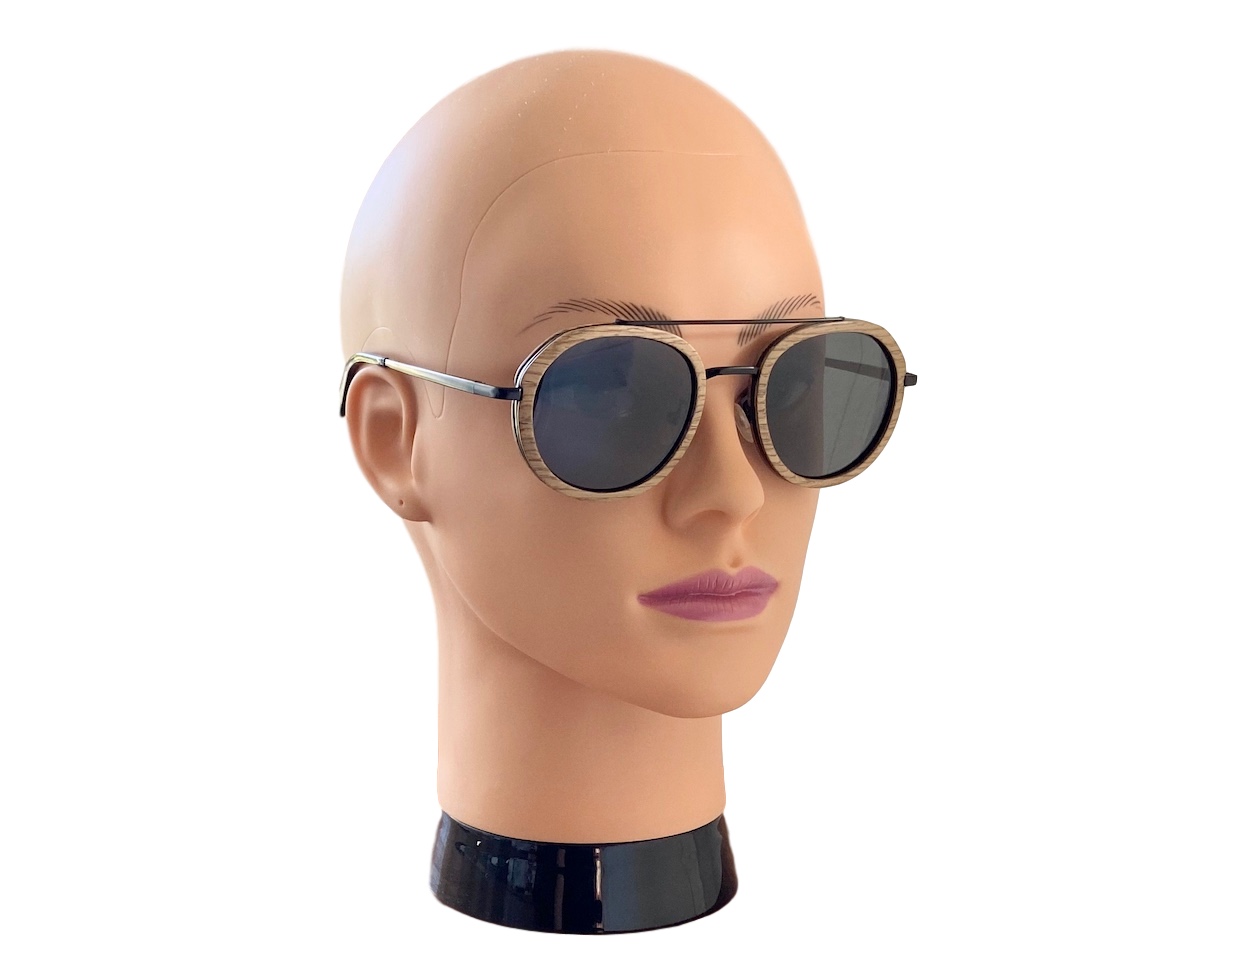 Luxe Walnut wood sunglasses on female model